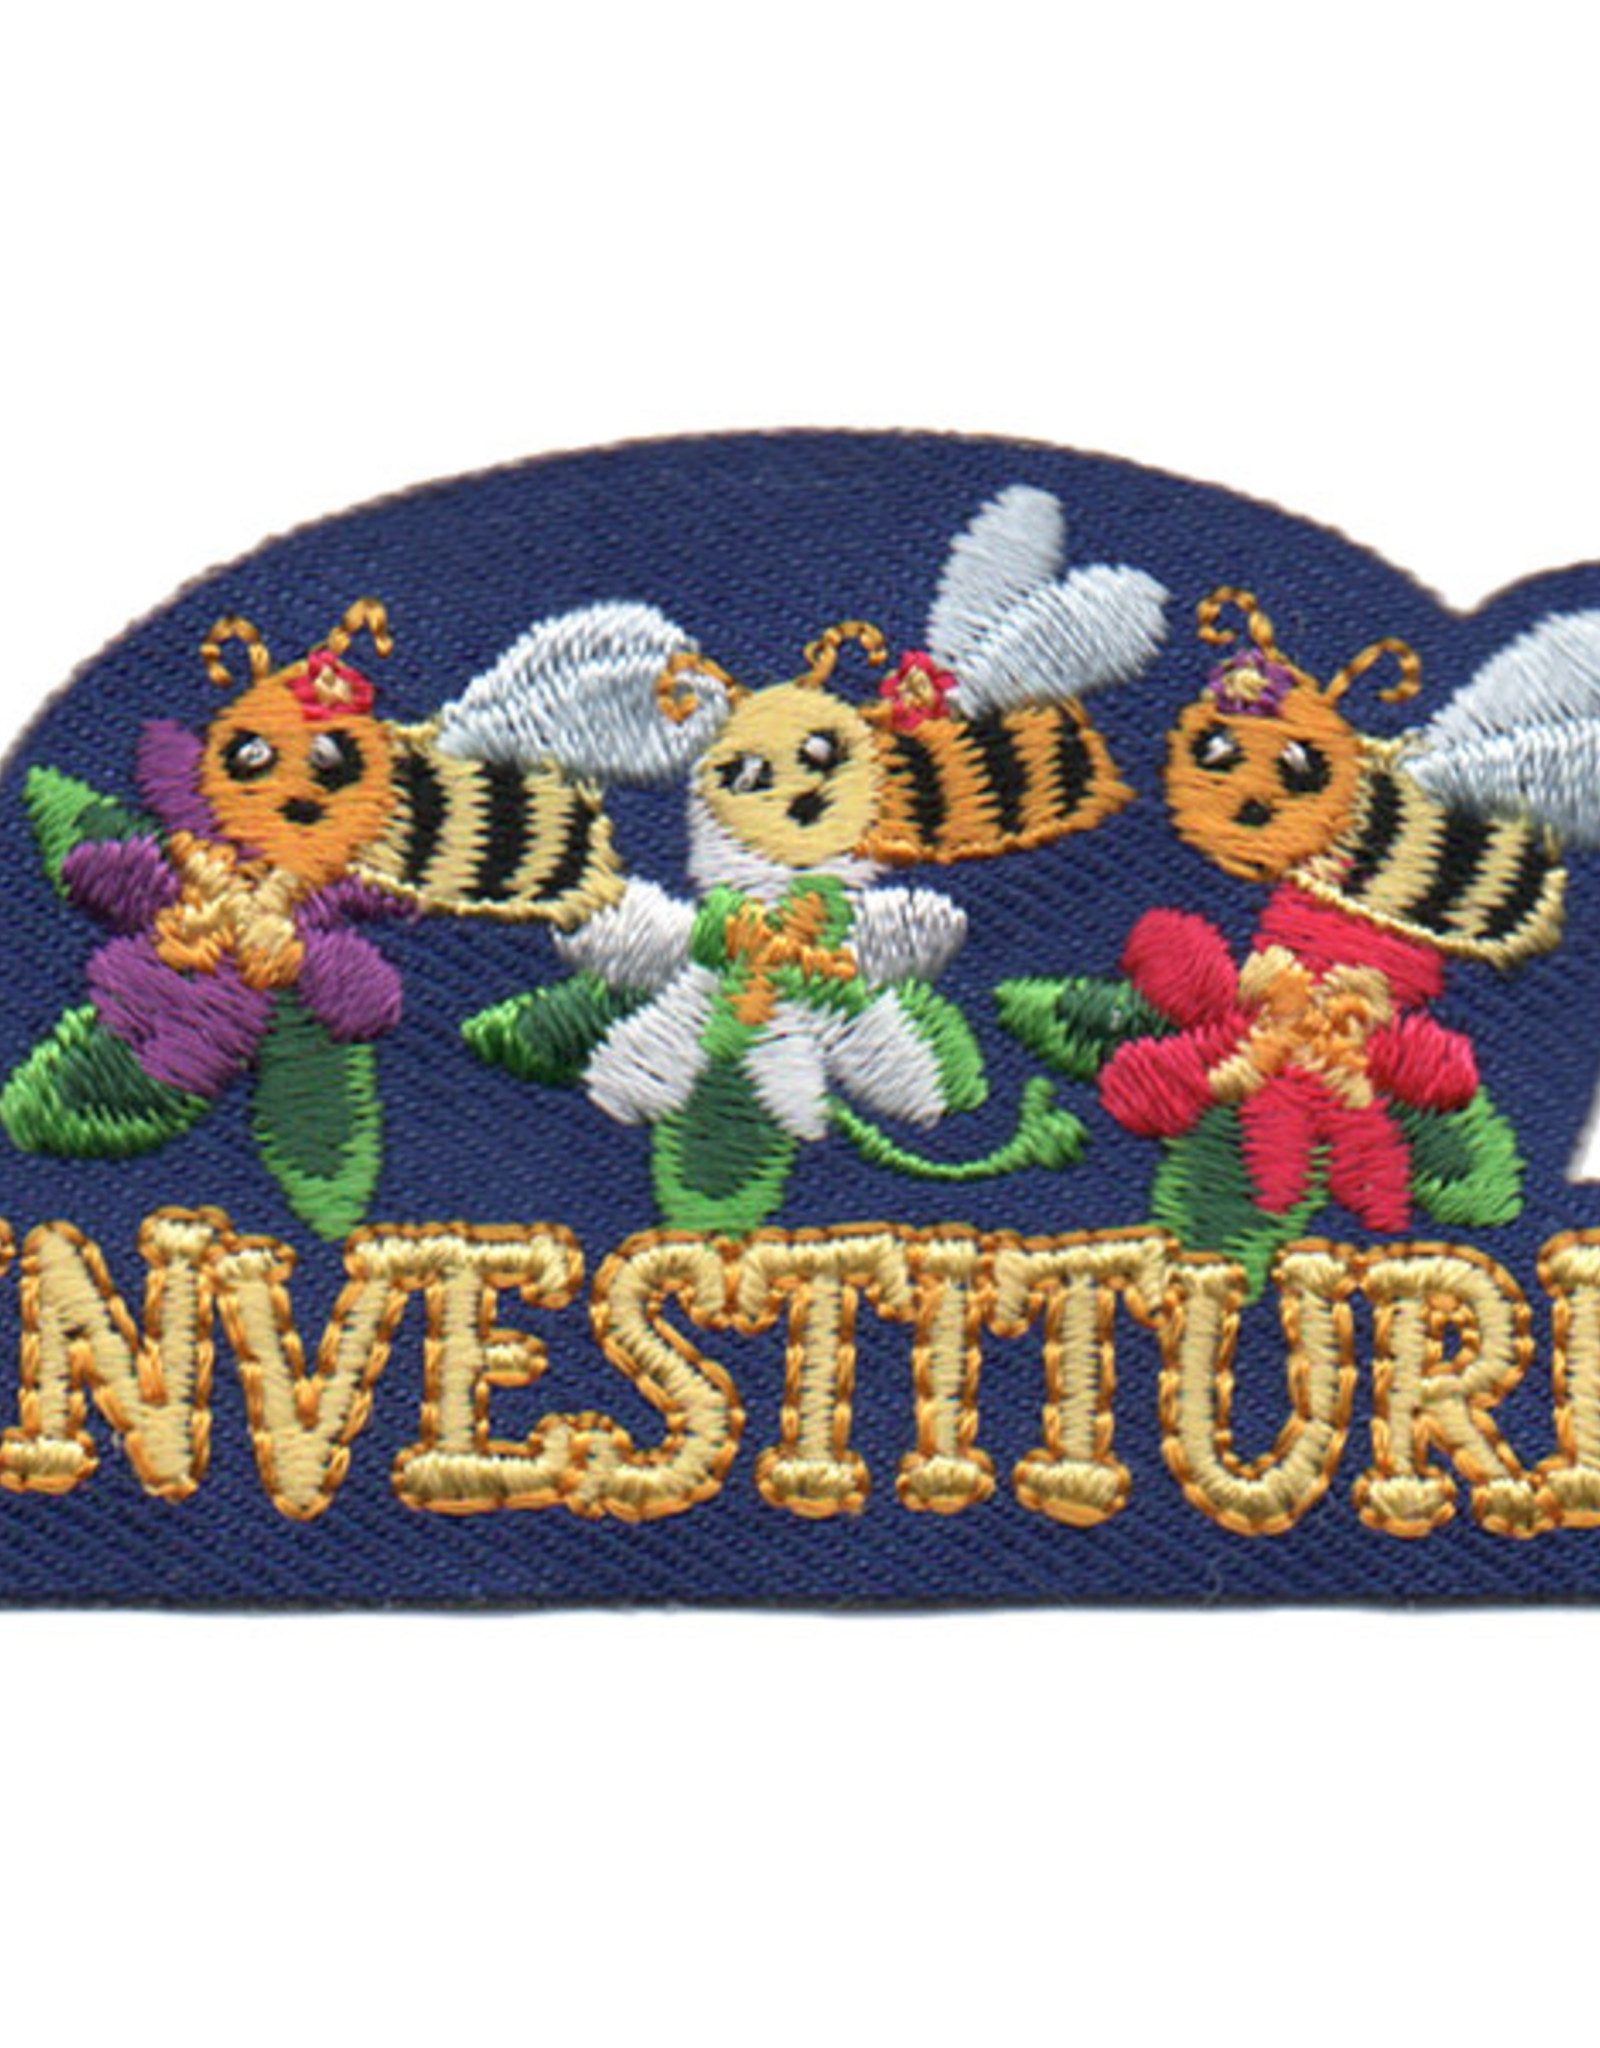 Advantage Emblem & Screen Prnt Investiture w/ Bees Fun Patch